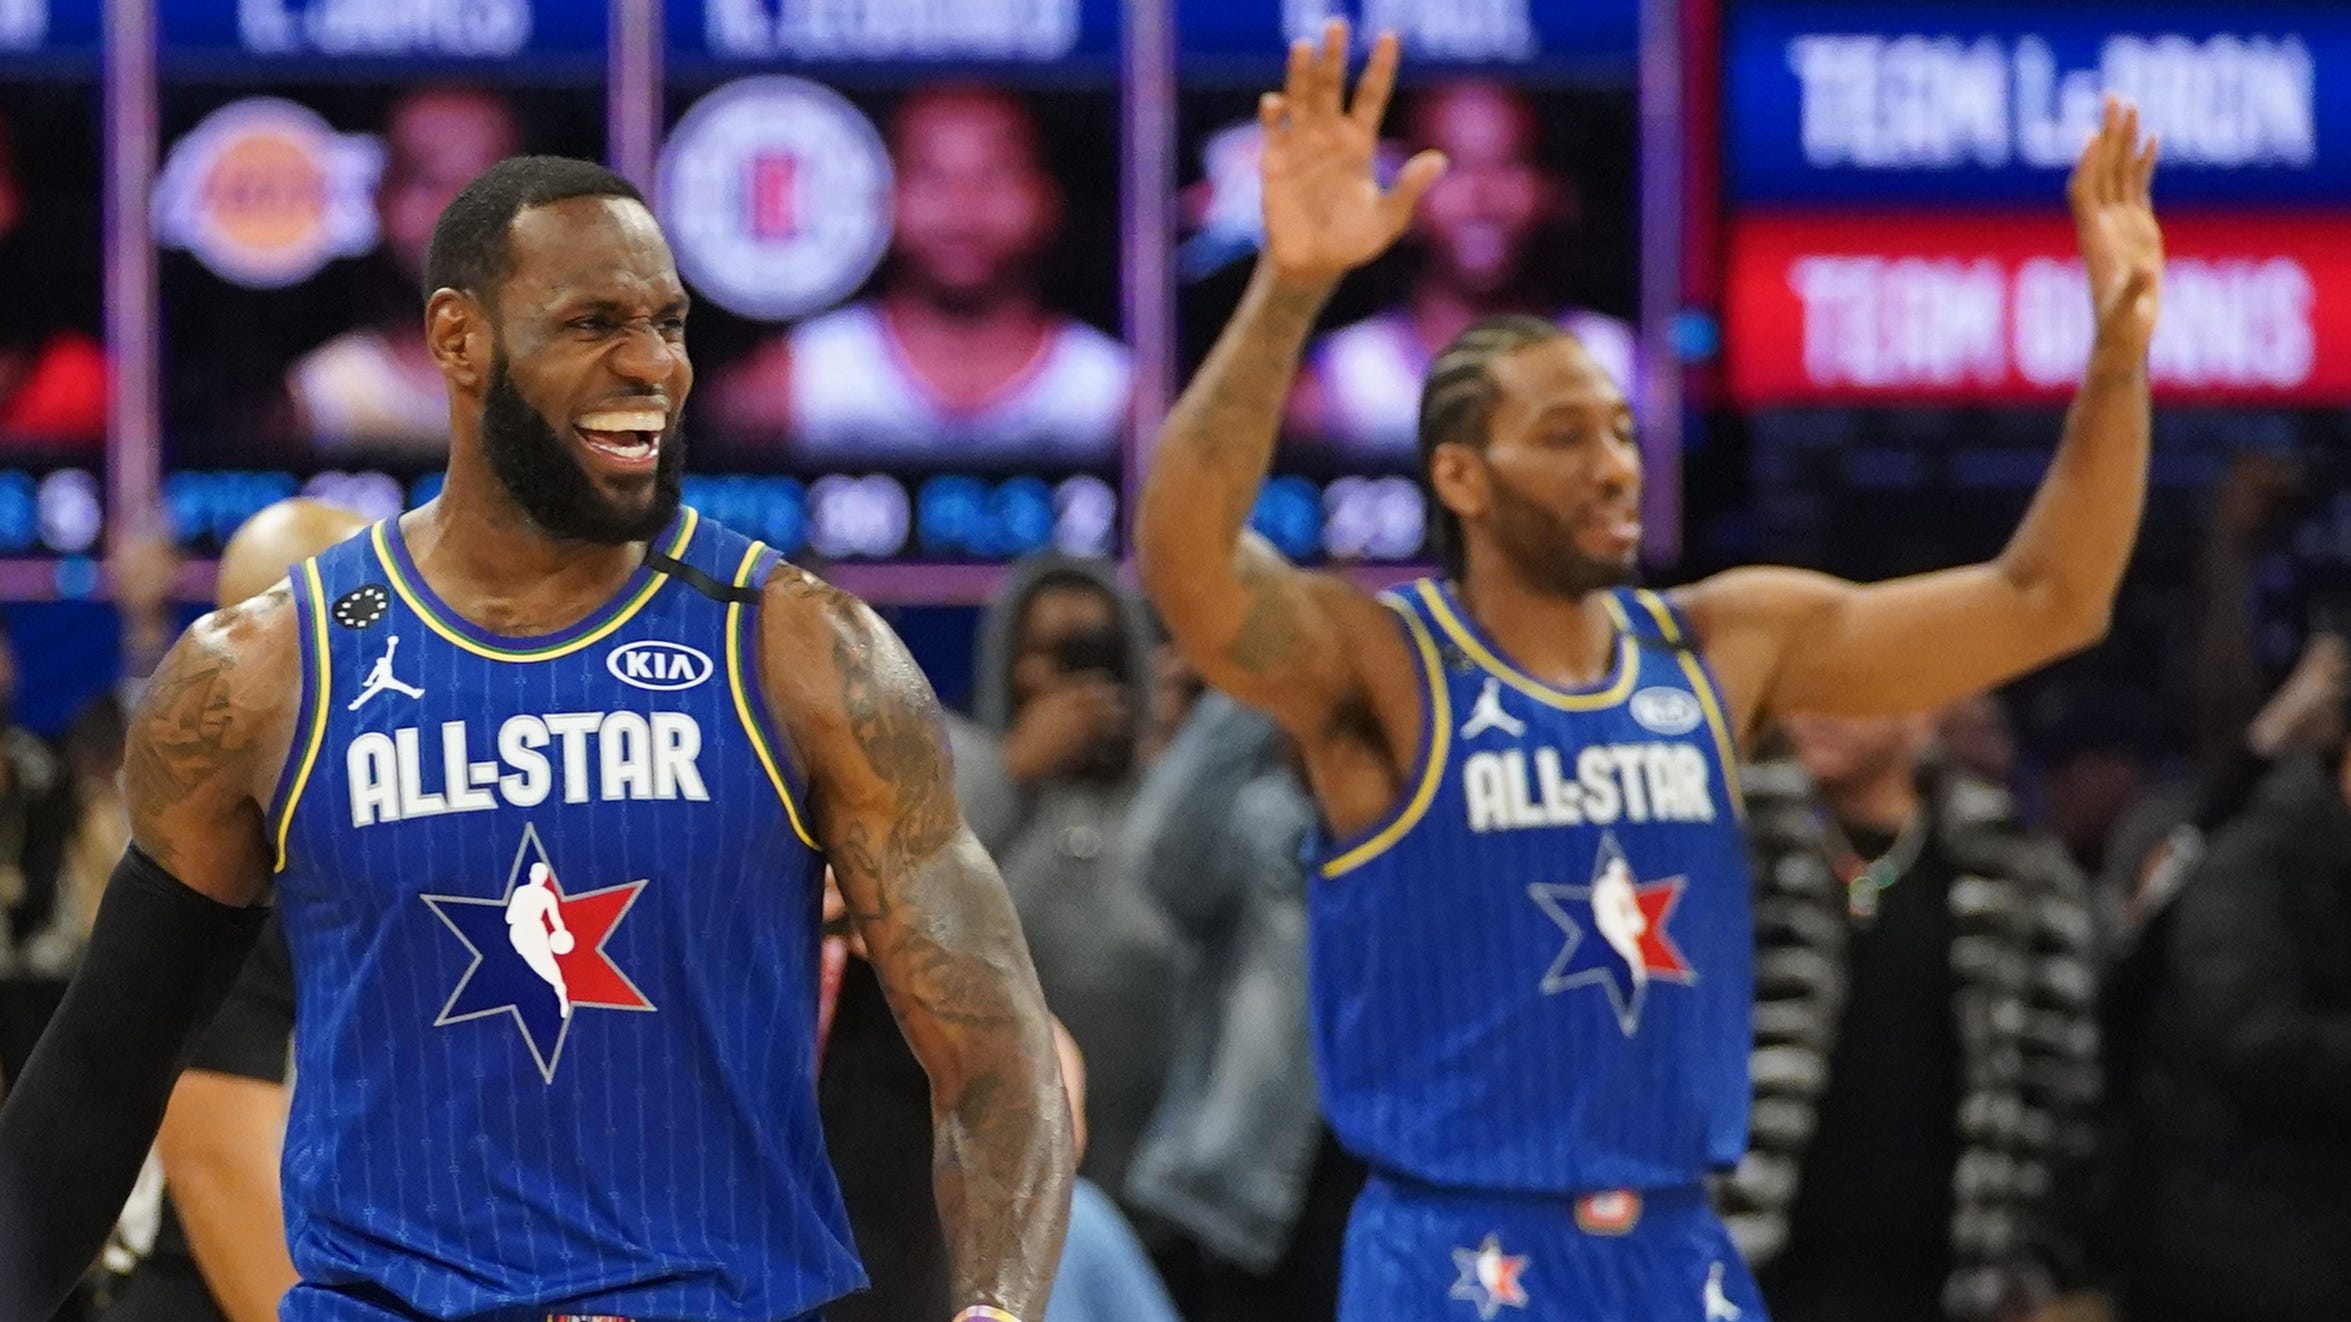 NBA AllStar Game success should mean more experimentation, innovation